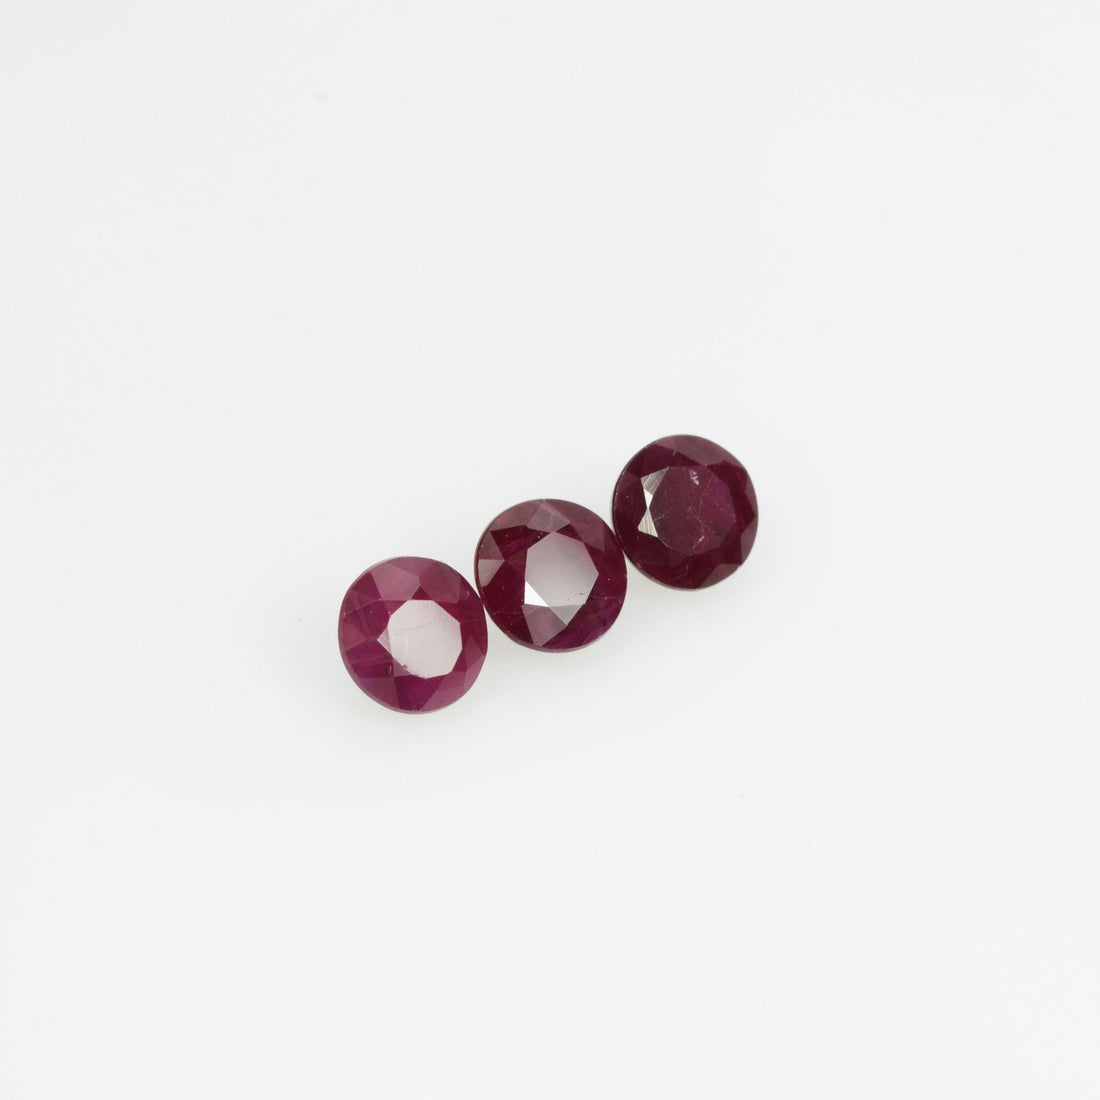 3.7-4.2 mm Natural Ruby Loose Gemstone Round Cut